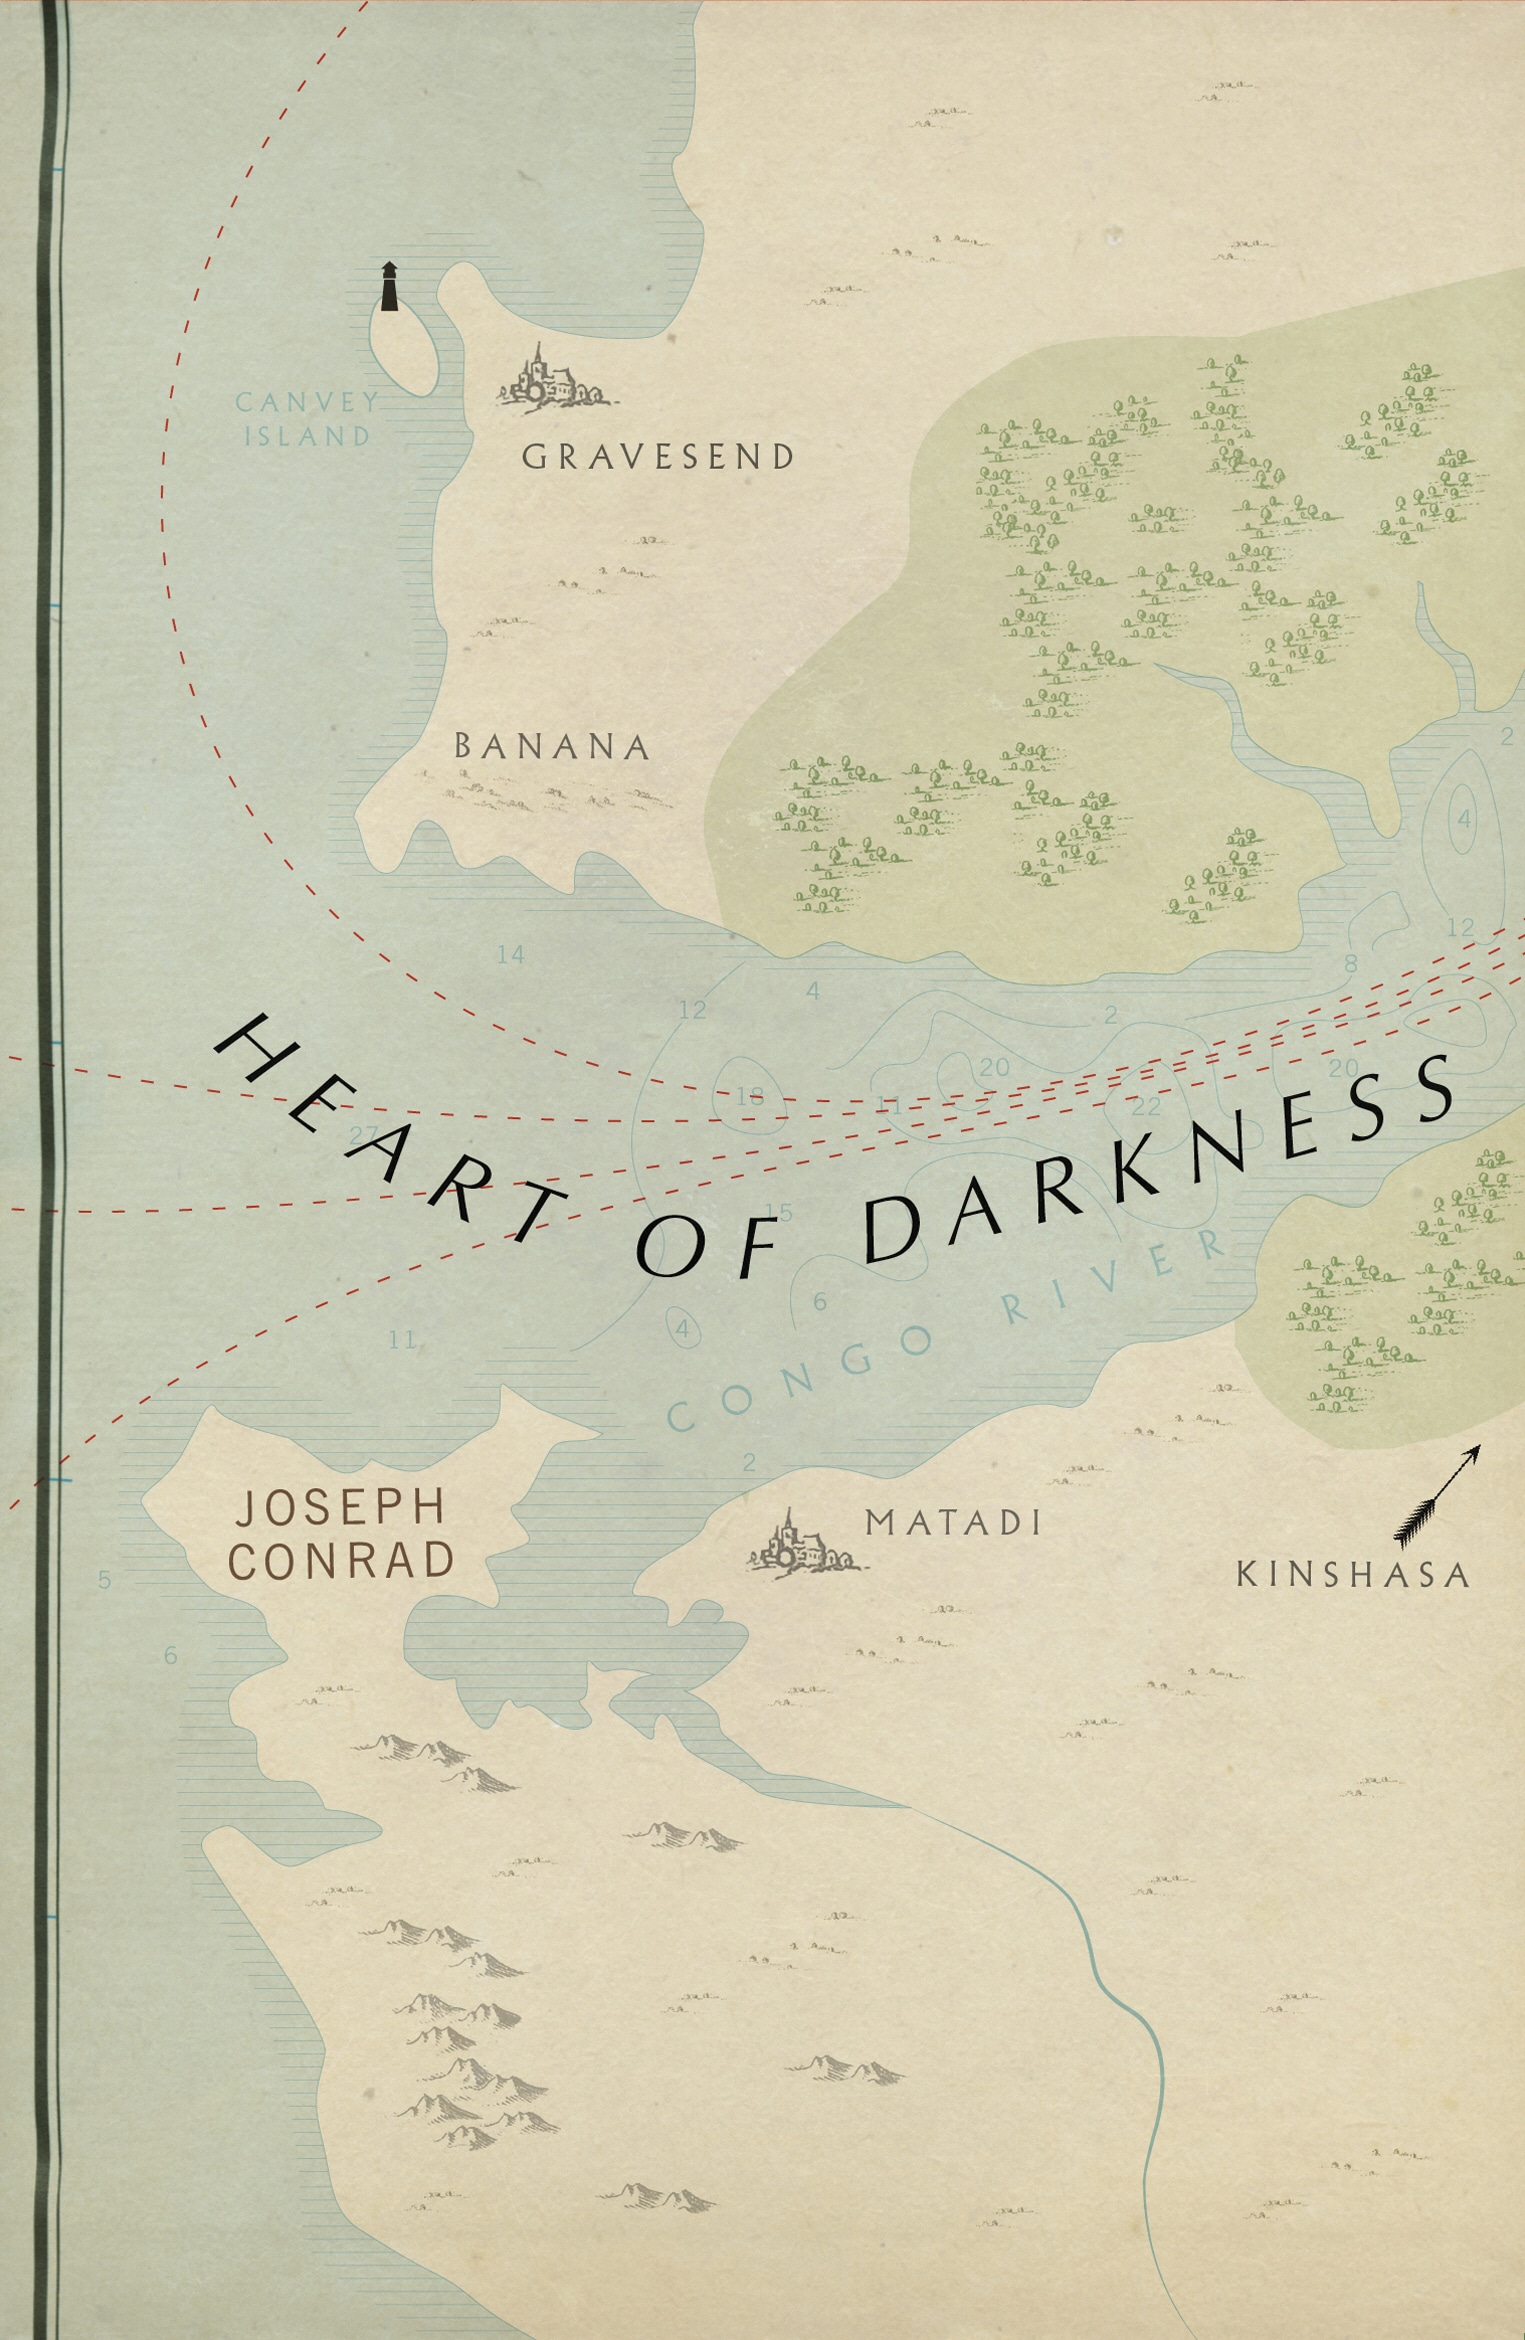 Book “Heart of Darkness” by Joseph Conrad, Tim Butcher — June 6, 2019